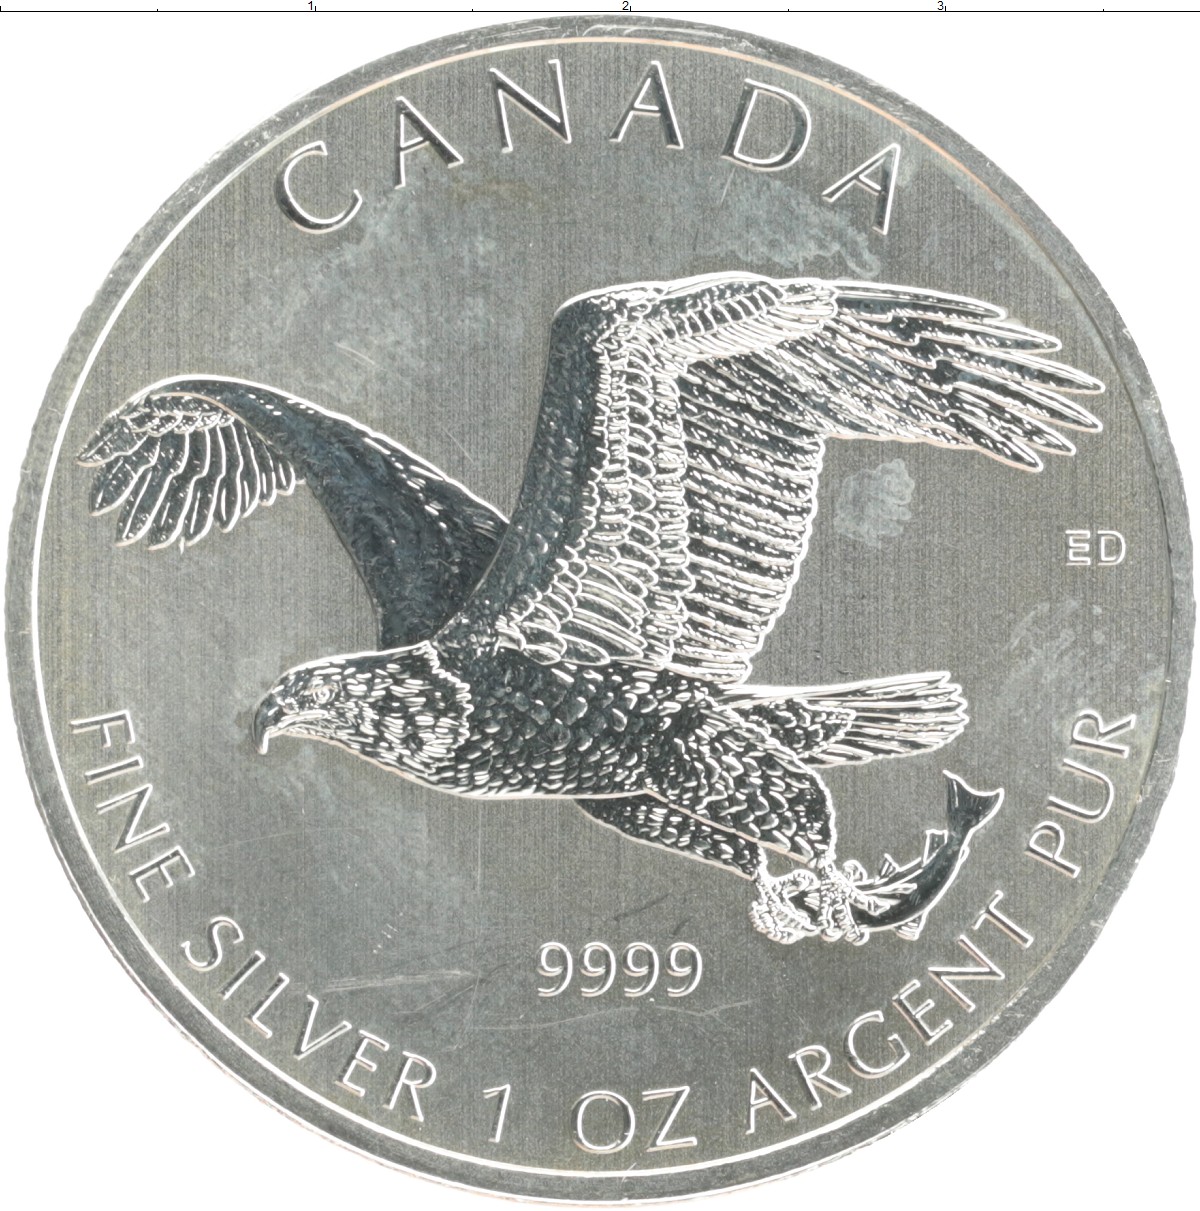 116 долларов в рублях. Монета Канада 5 долларов 2014 Коршун серебро. 5 Канадских долларов. 5 Долларов Канада 2014. Канадский доллар 5 долларов монета.